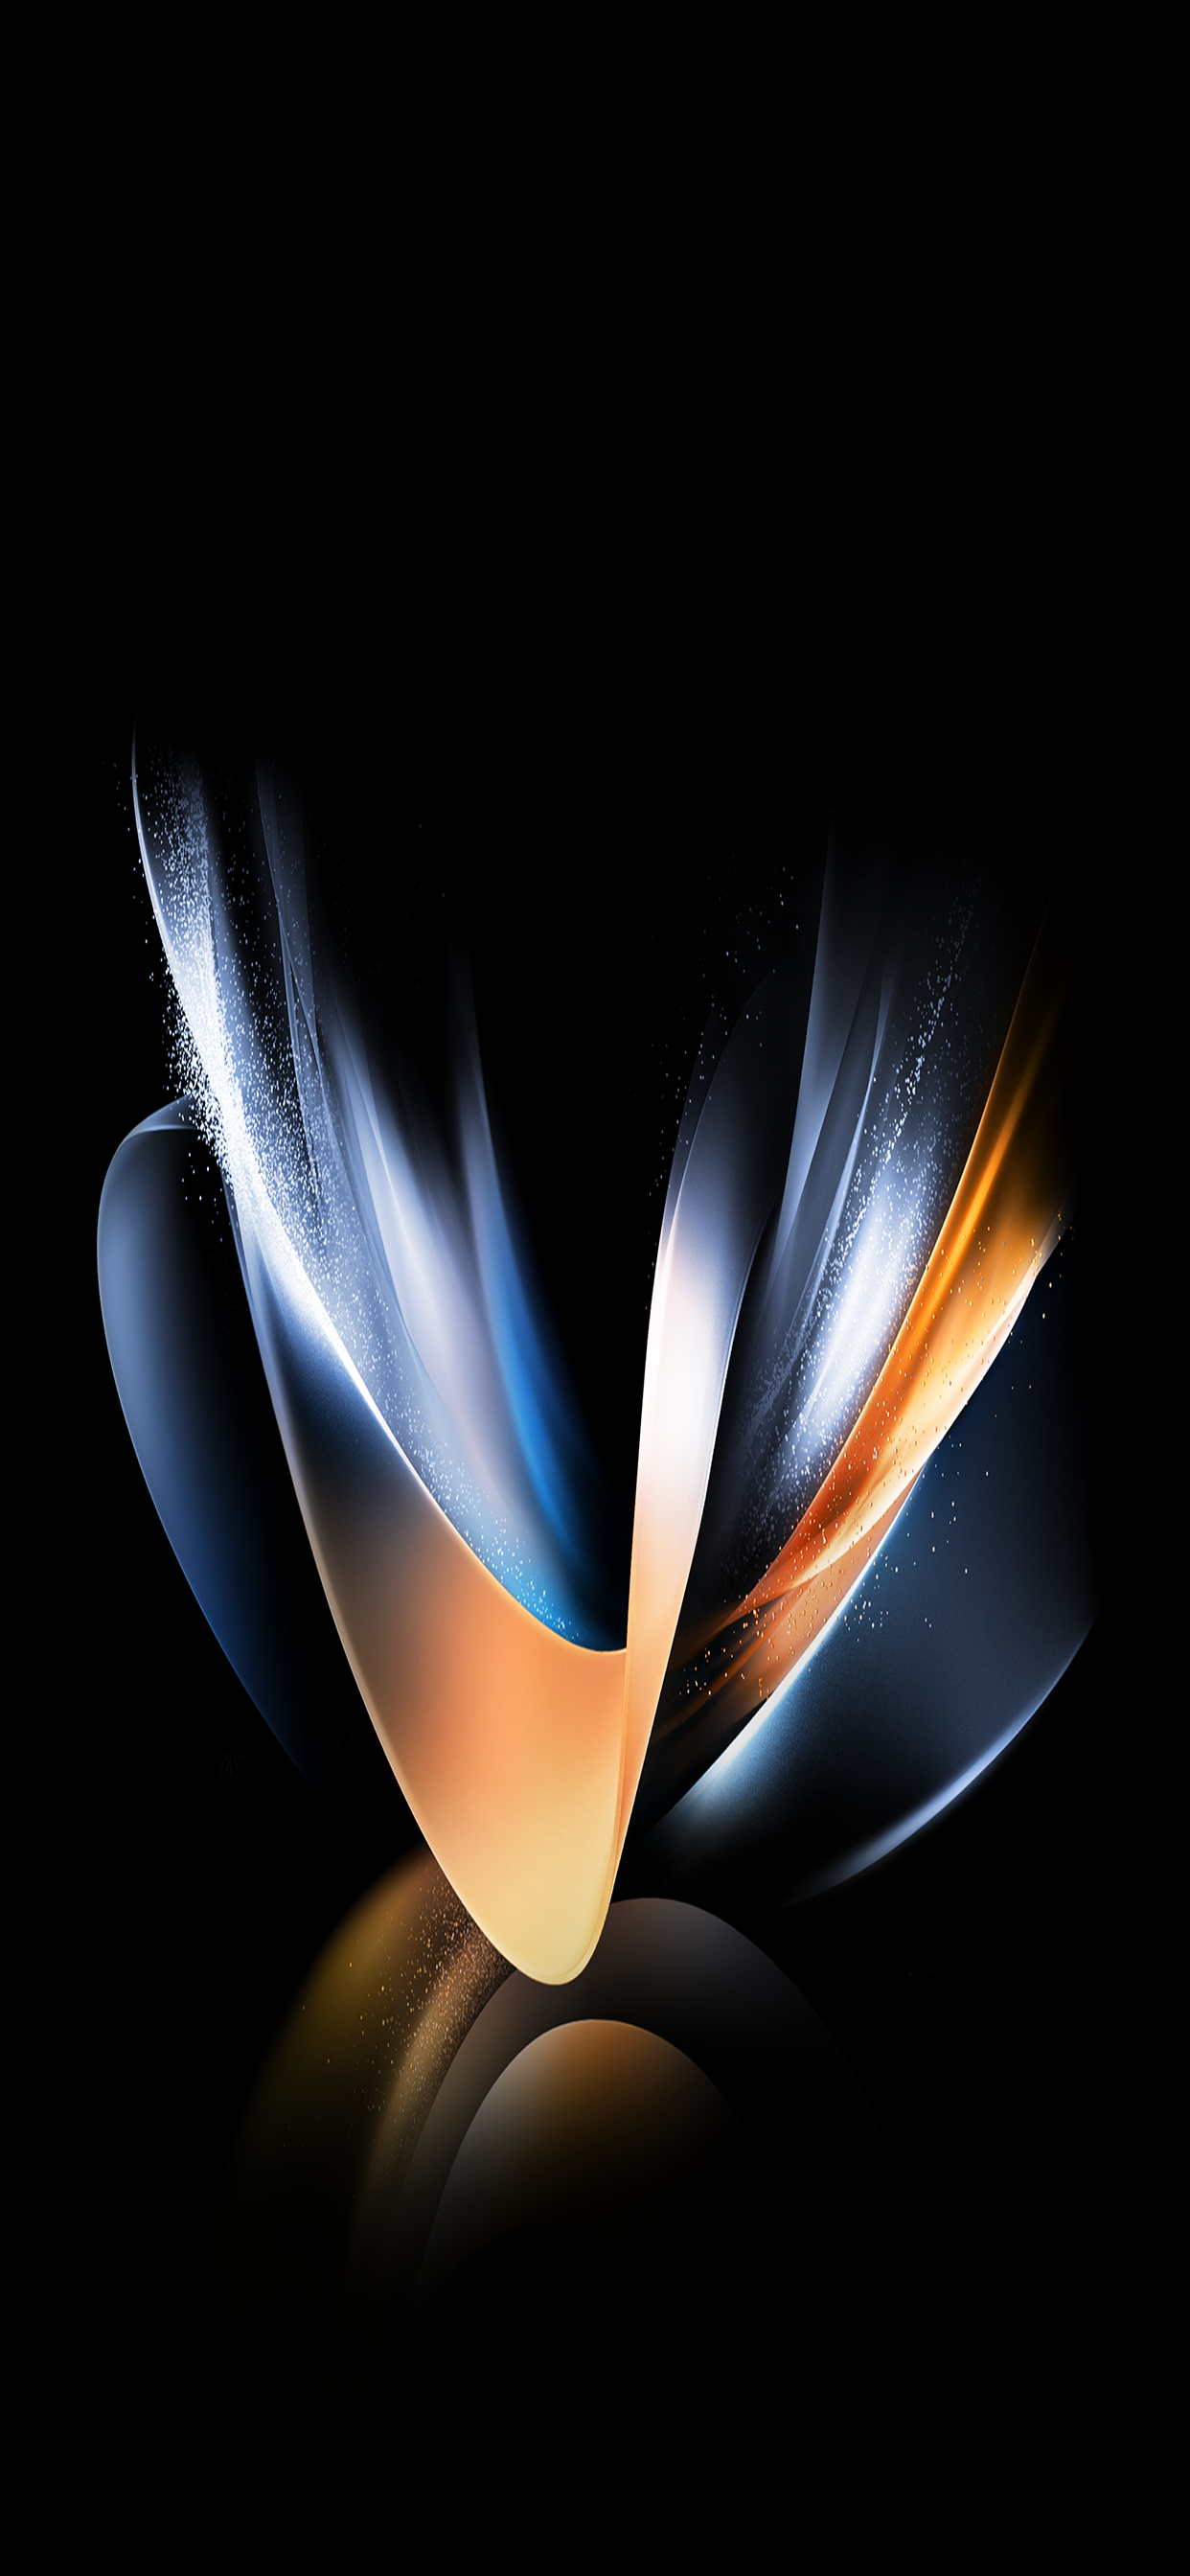 Samsung Galaxy Z Fold 4. Download Galaxy Z Fold 4 Stock Wallpaper (H.Q) for iPhone